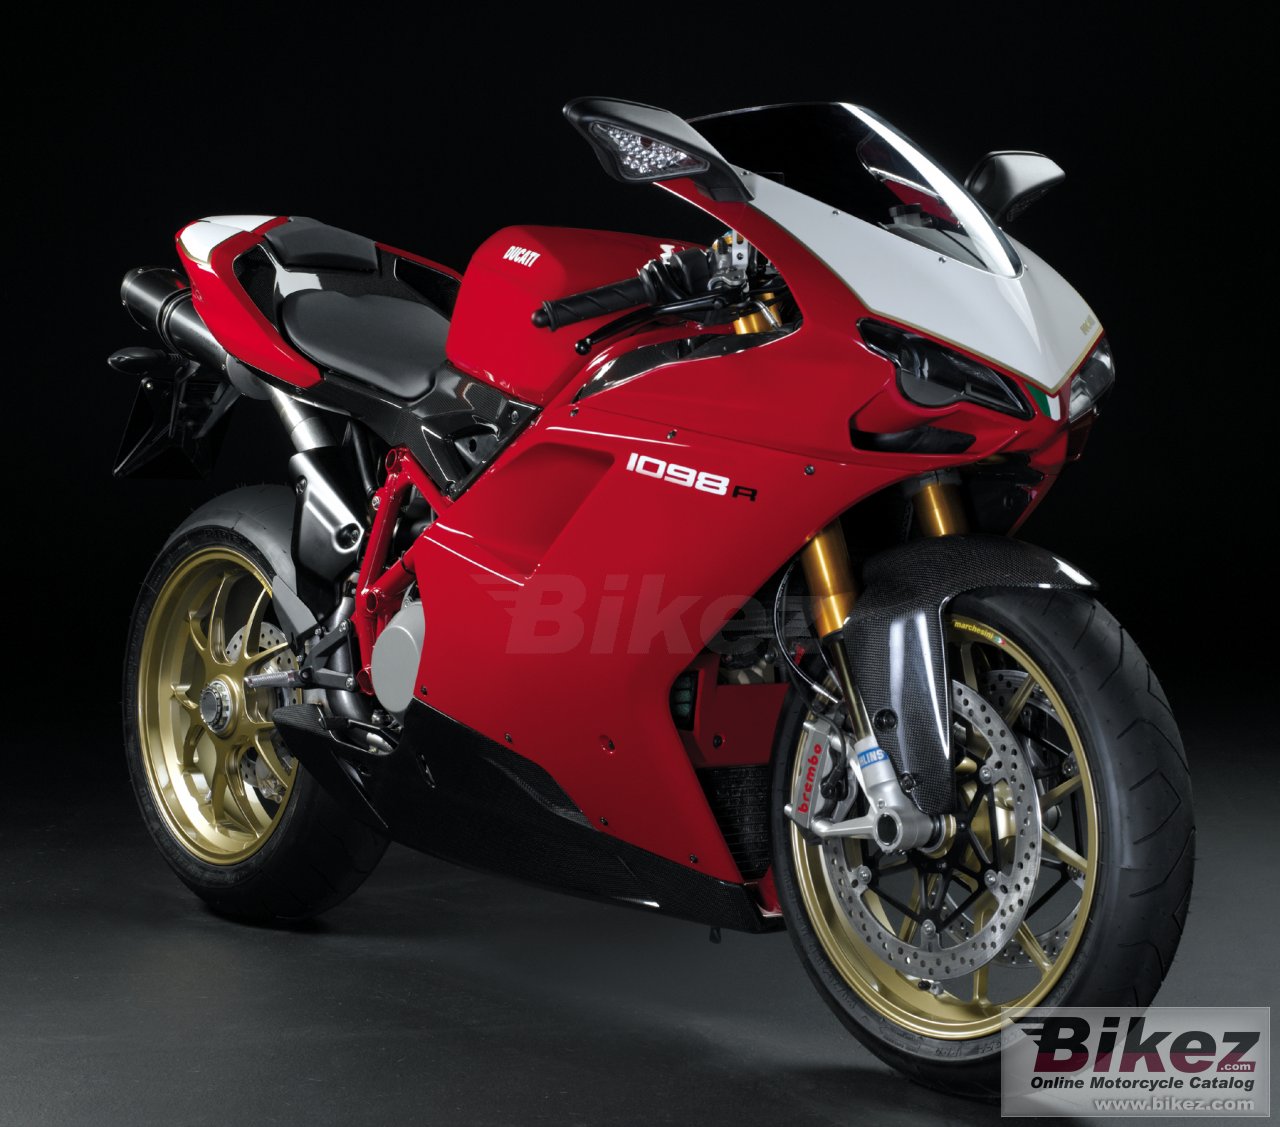 26533 0 1 4 Superbike 1098 R Image Credits Ducati Tengkuarys Blog